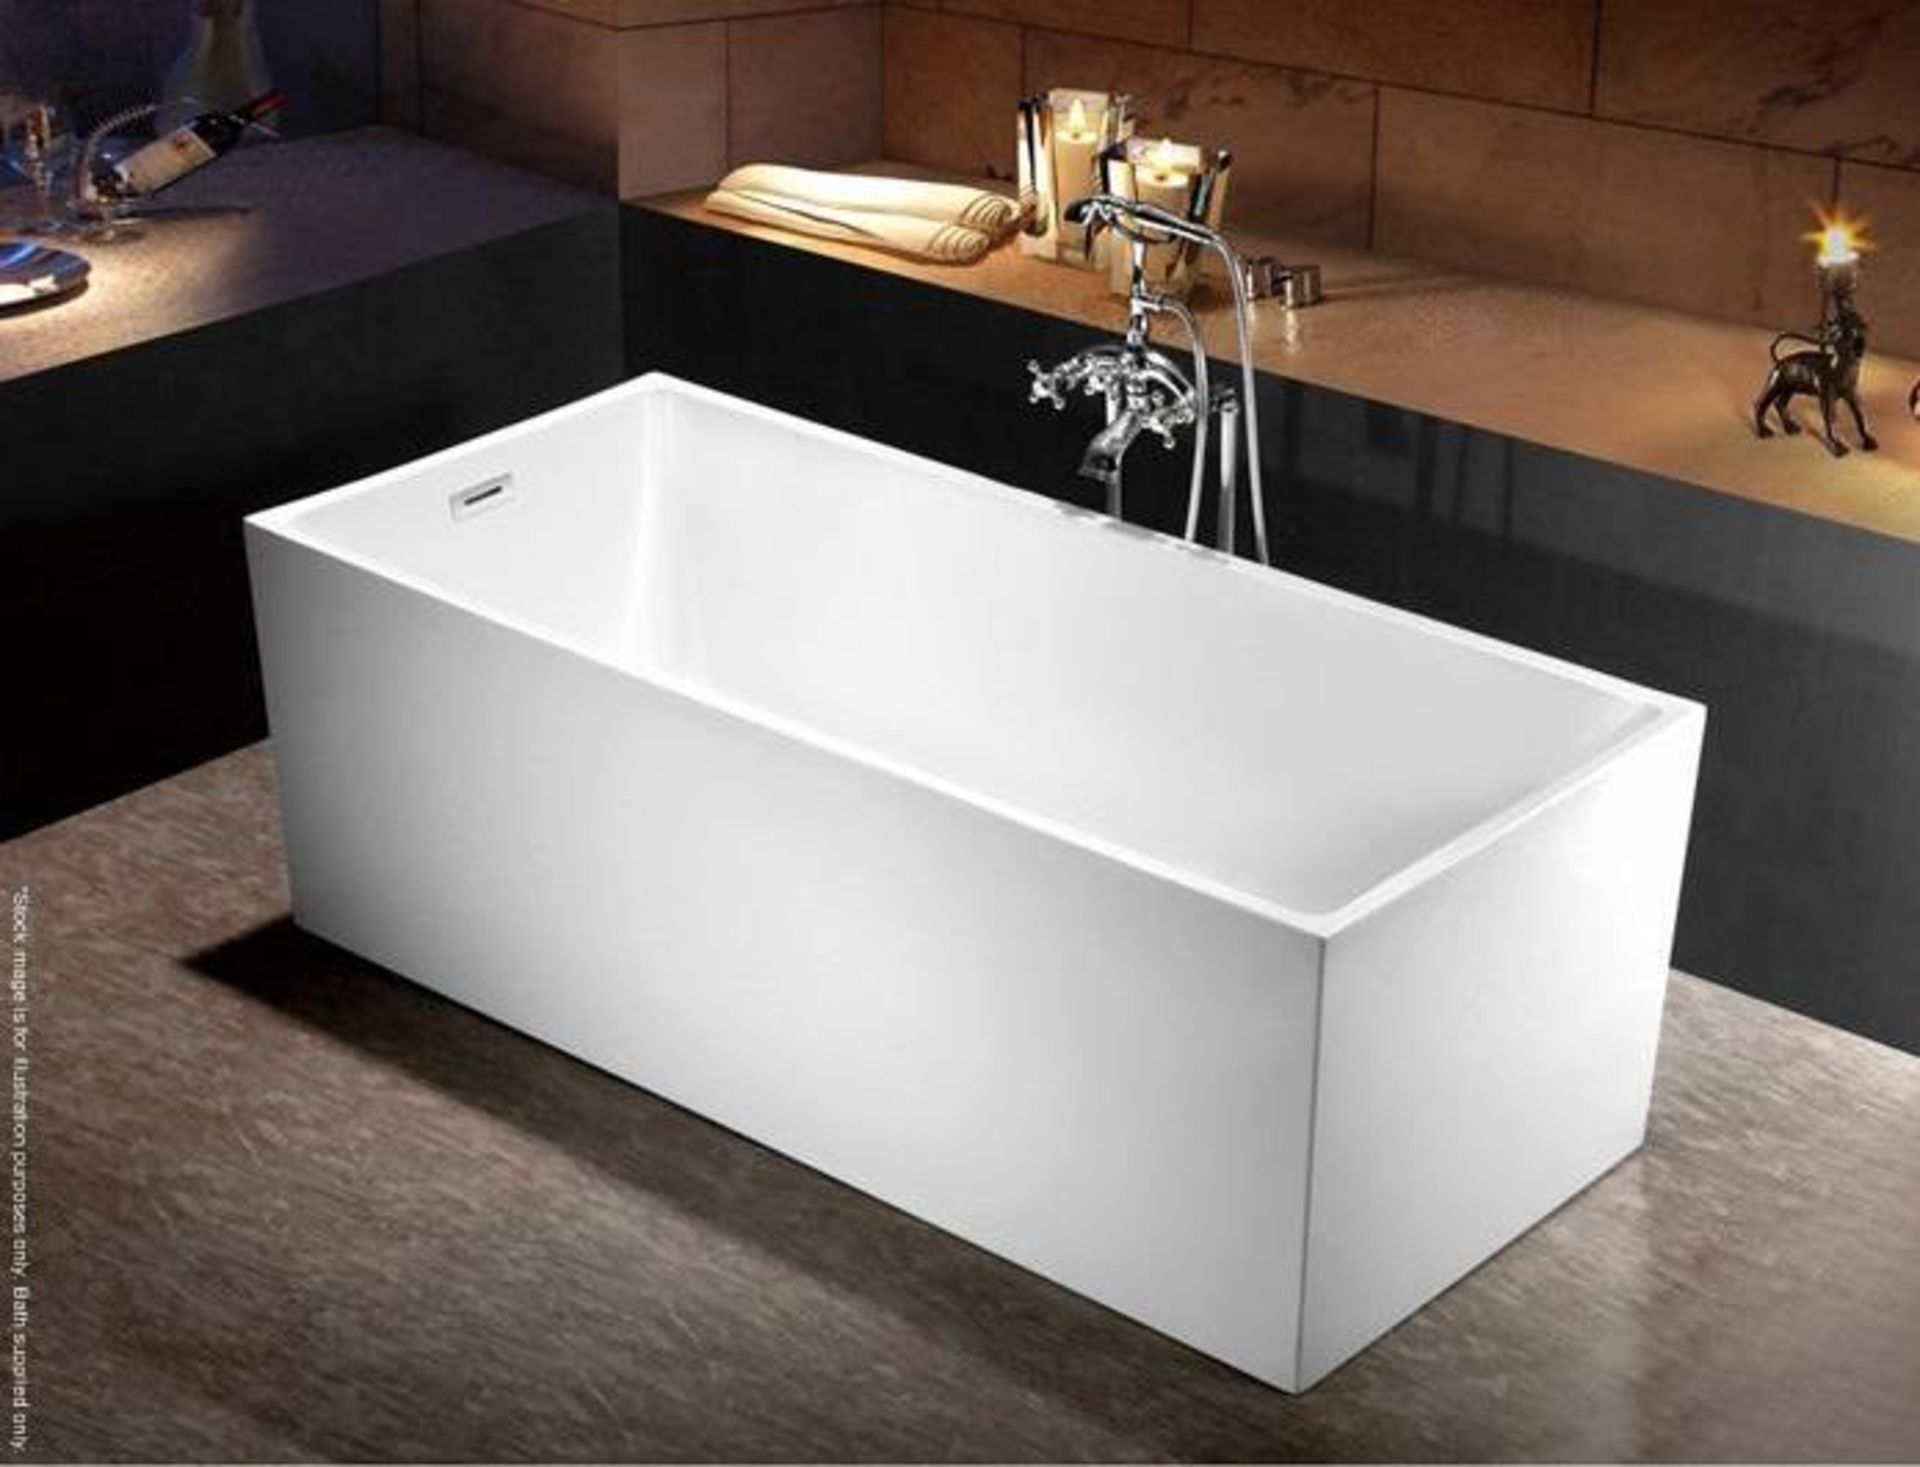 1 x Seamless Freestanding Acrylic Rectangular Soaking Bath Tub - Dimensions: 75x140x58cm - Brand New